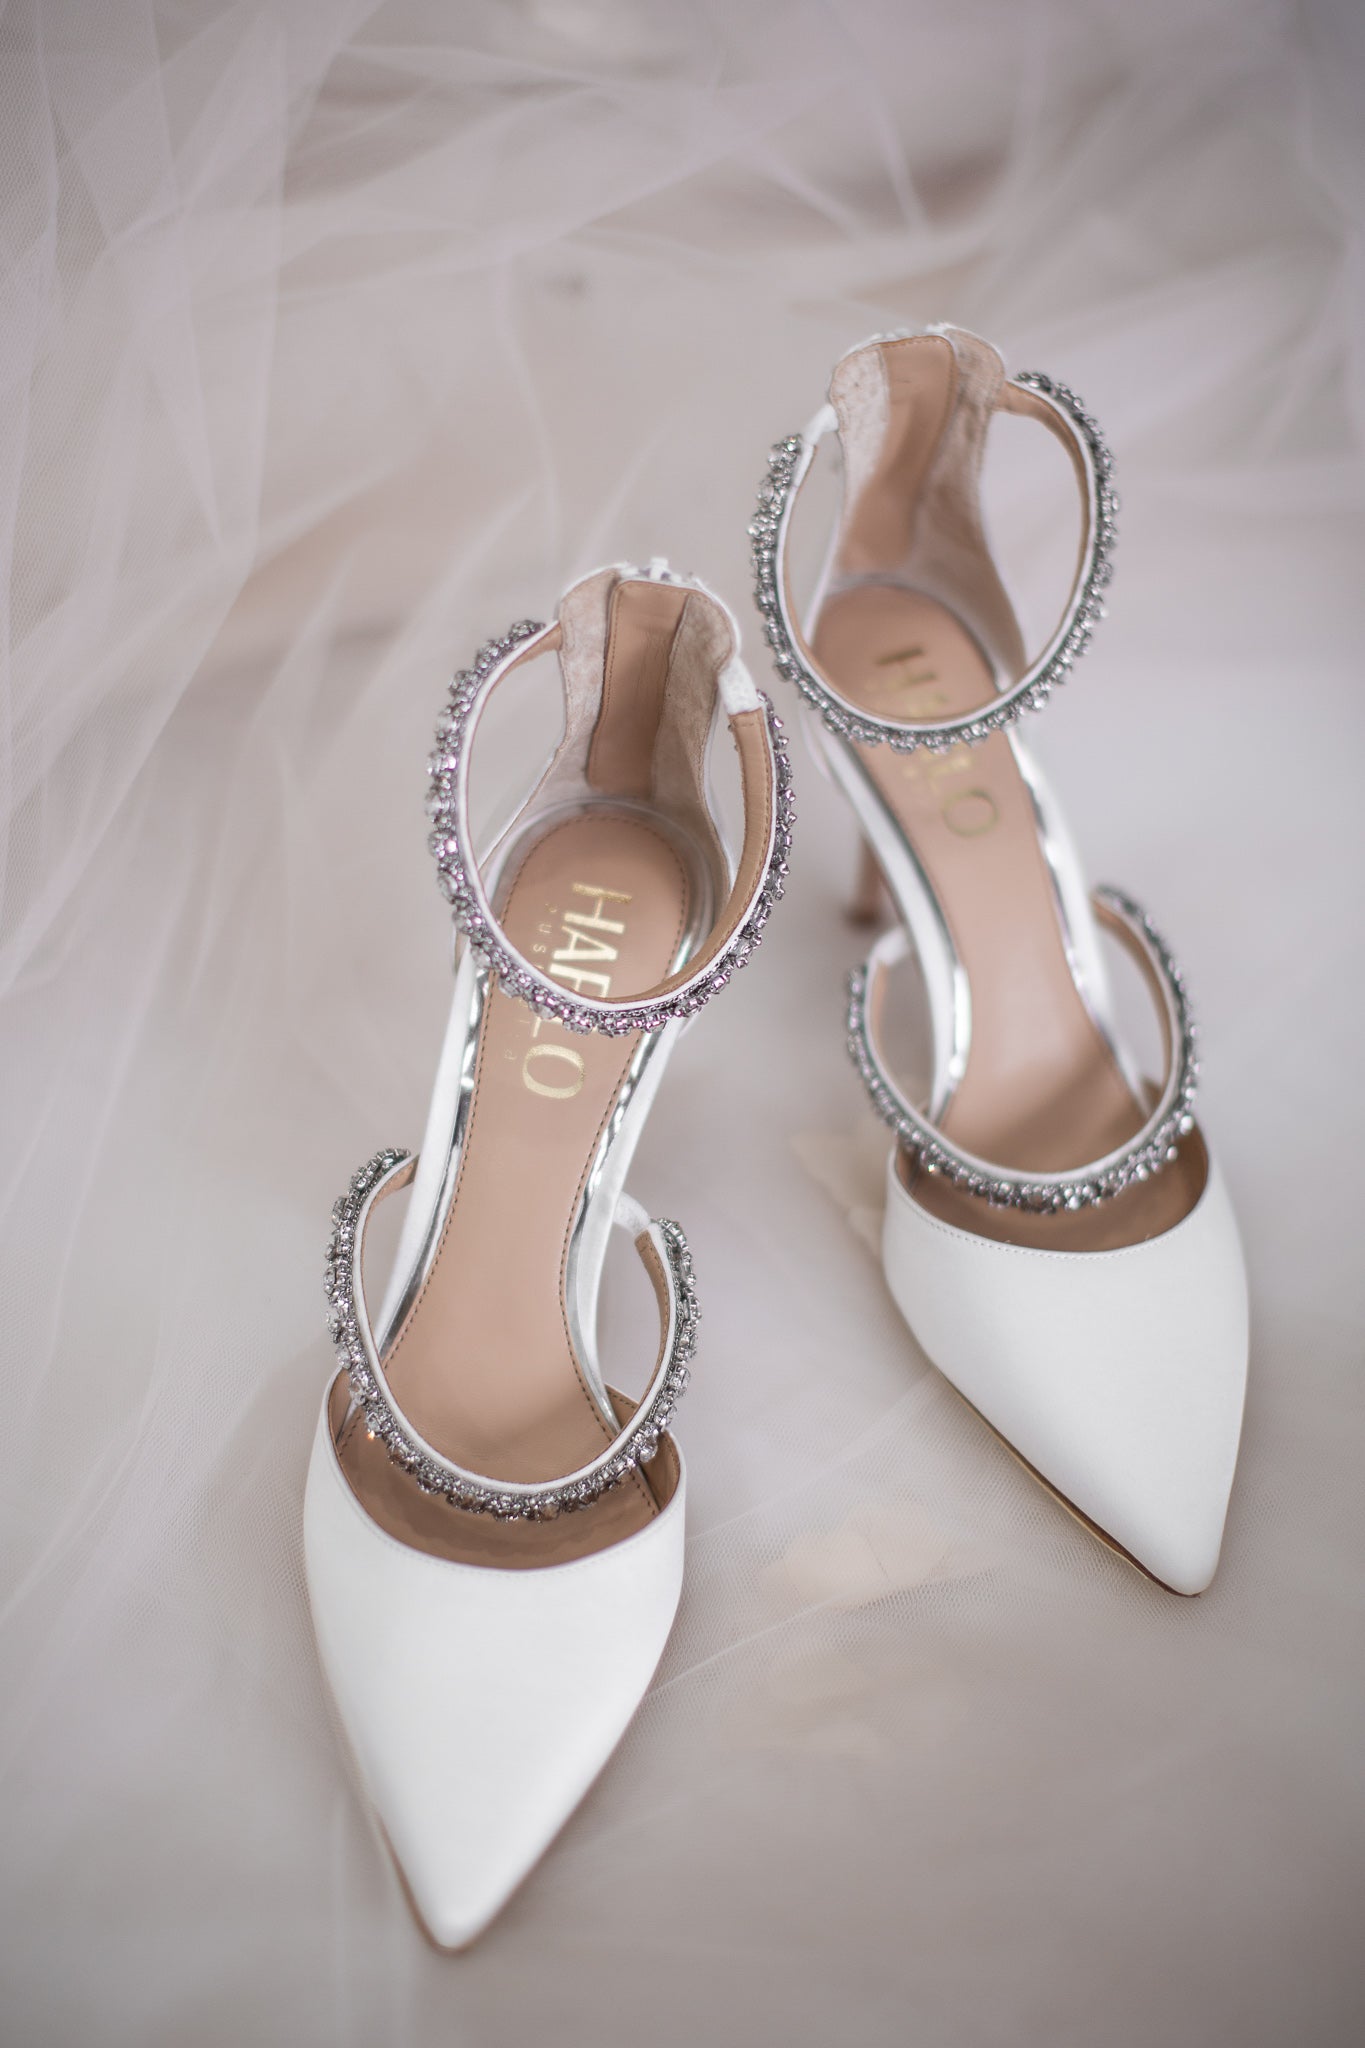 Adelaide - White Point Toe Bridal Heel